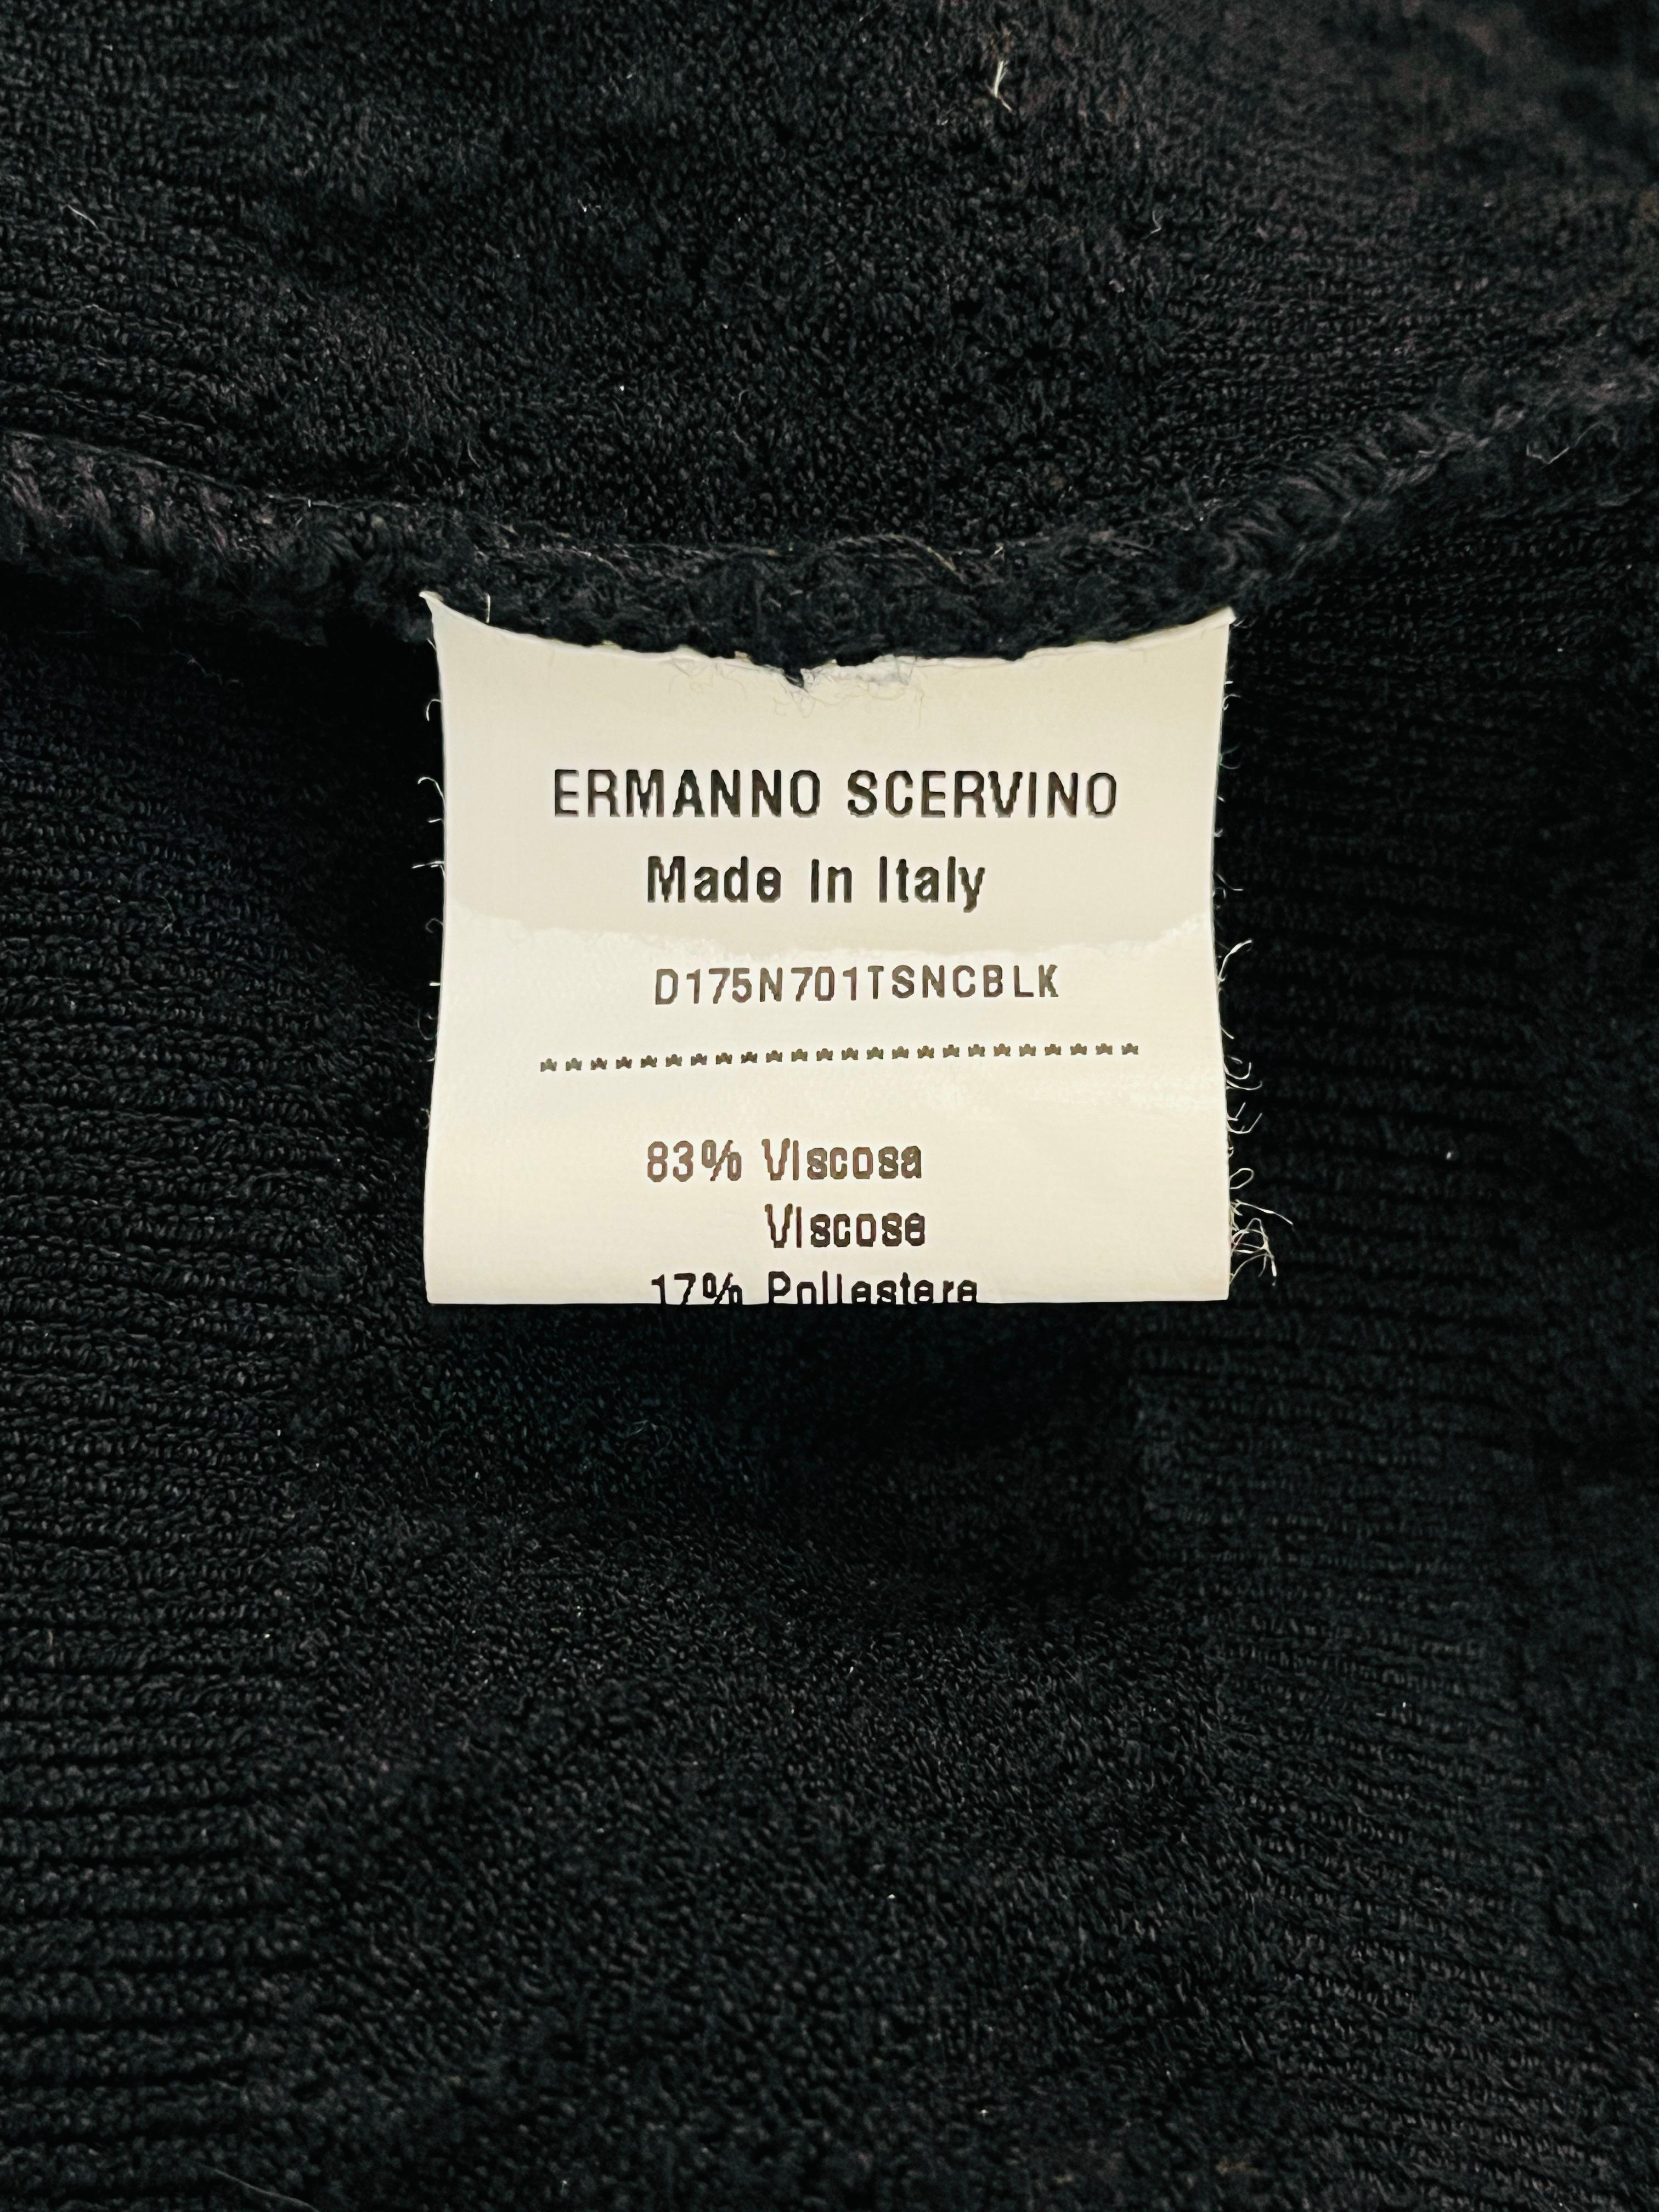 Ermanno Scervino Crochet Longline Cardigan For Sale 1